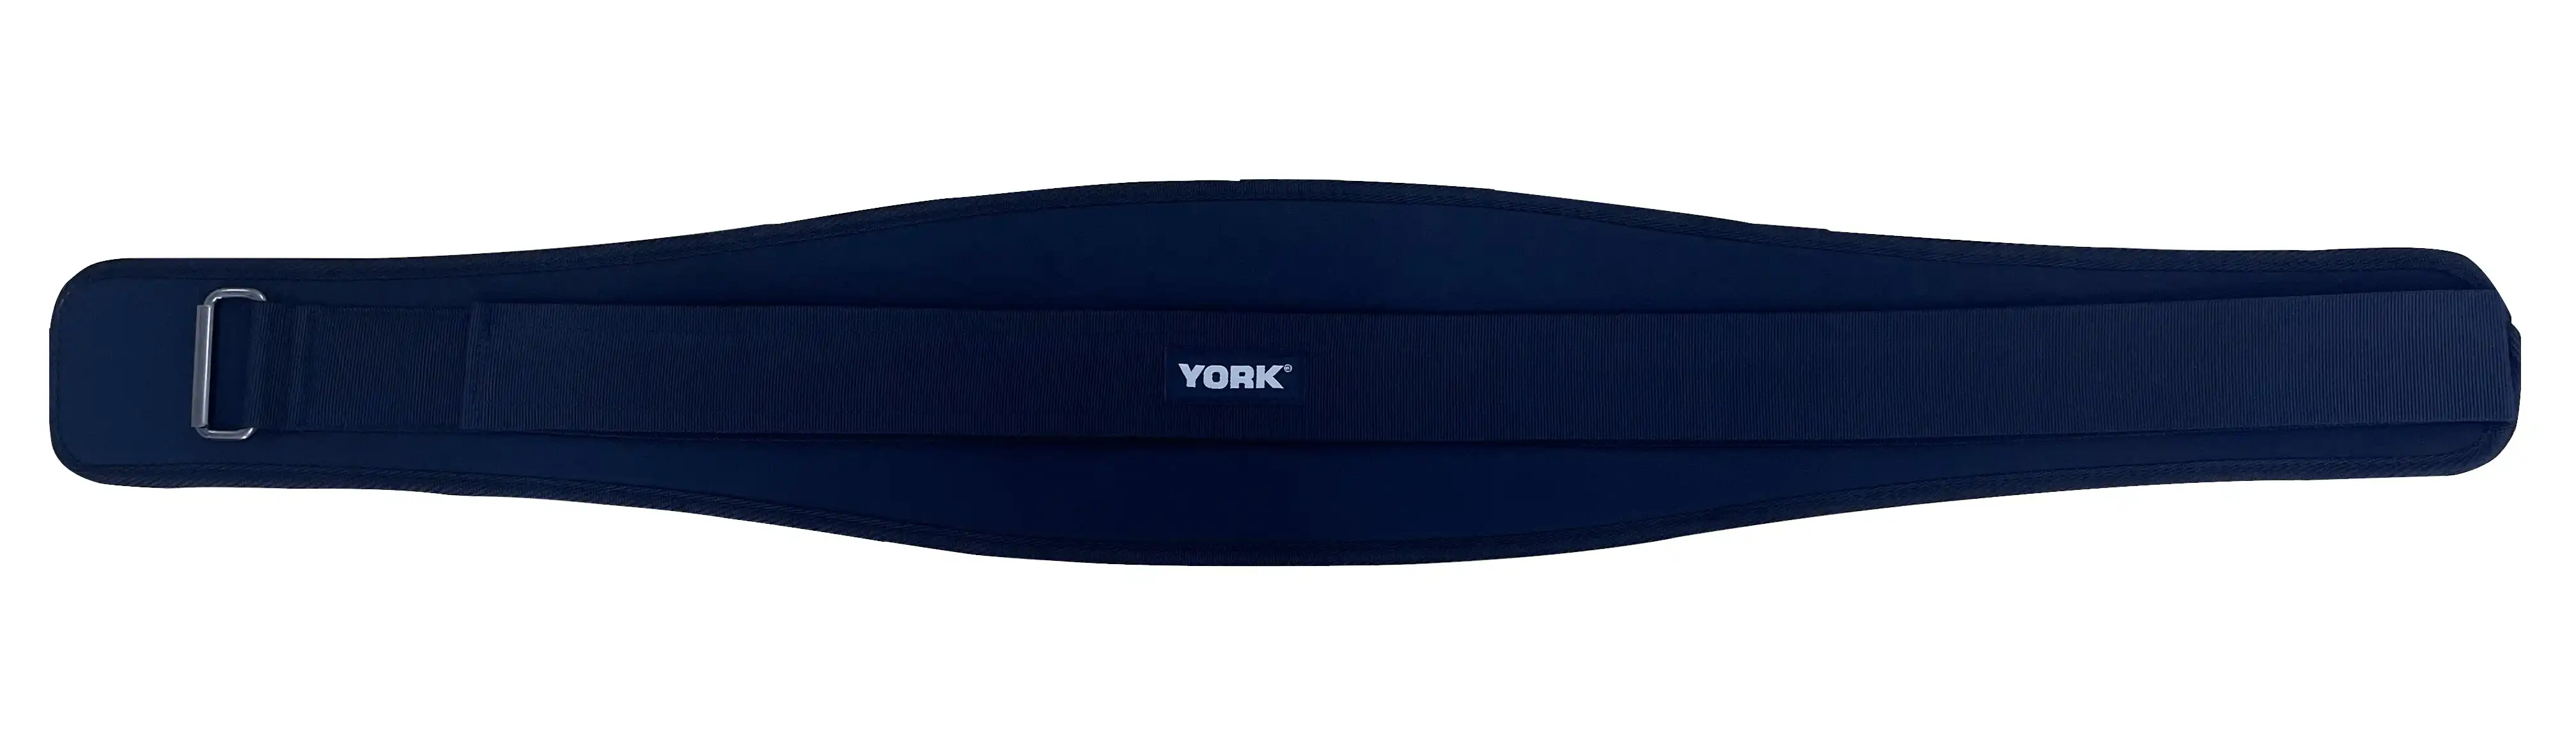 York Fitness 6" York Nylon Padded Weight lifting Belt Large